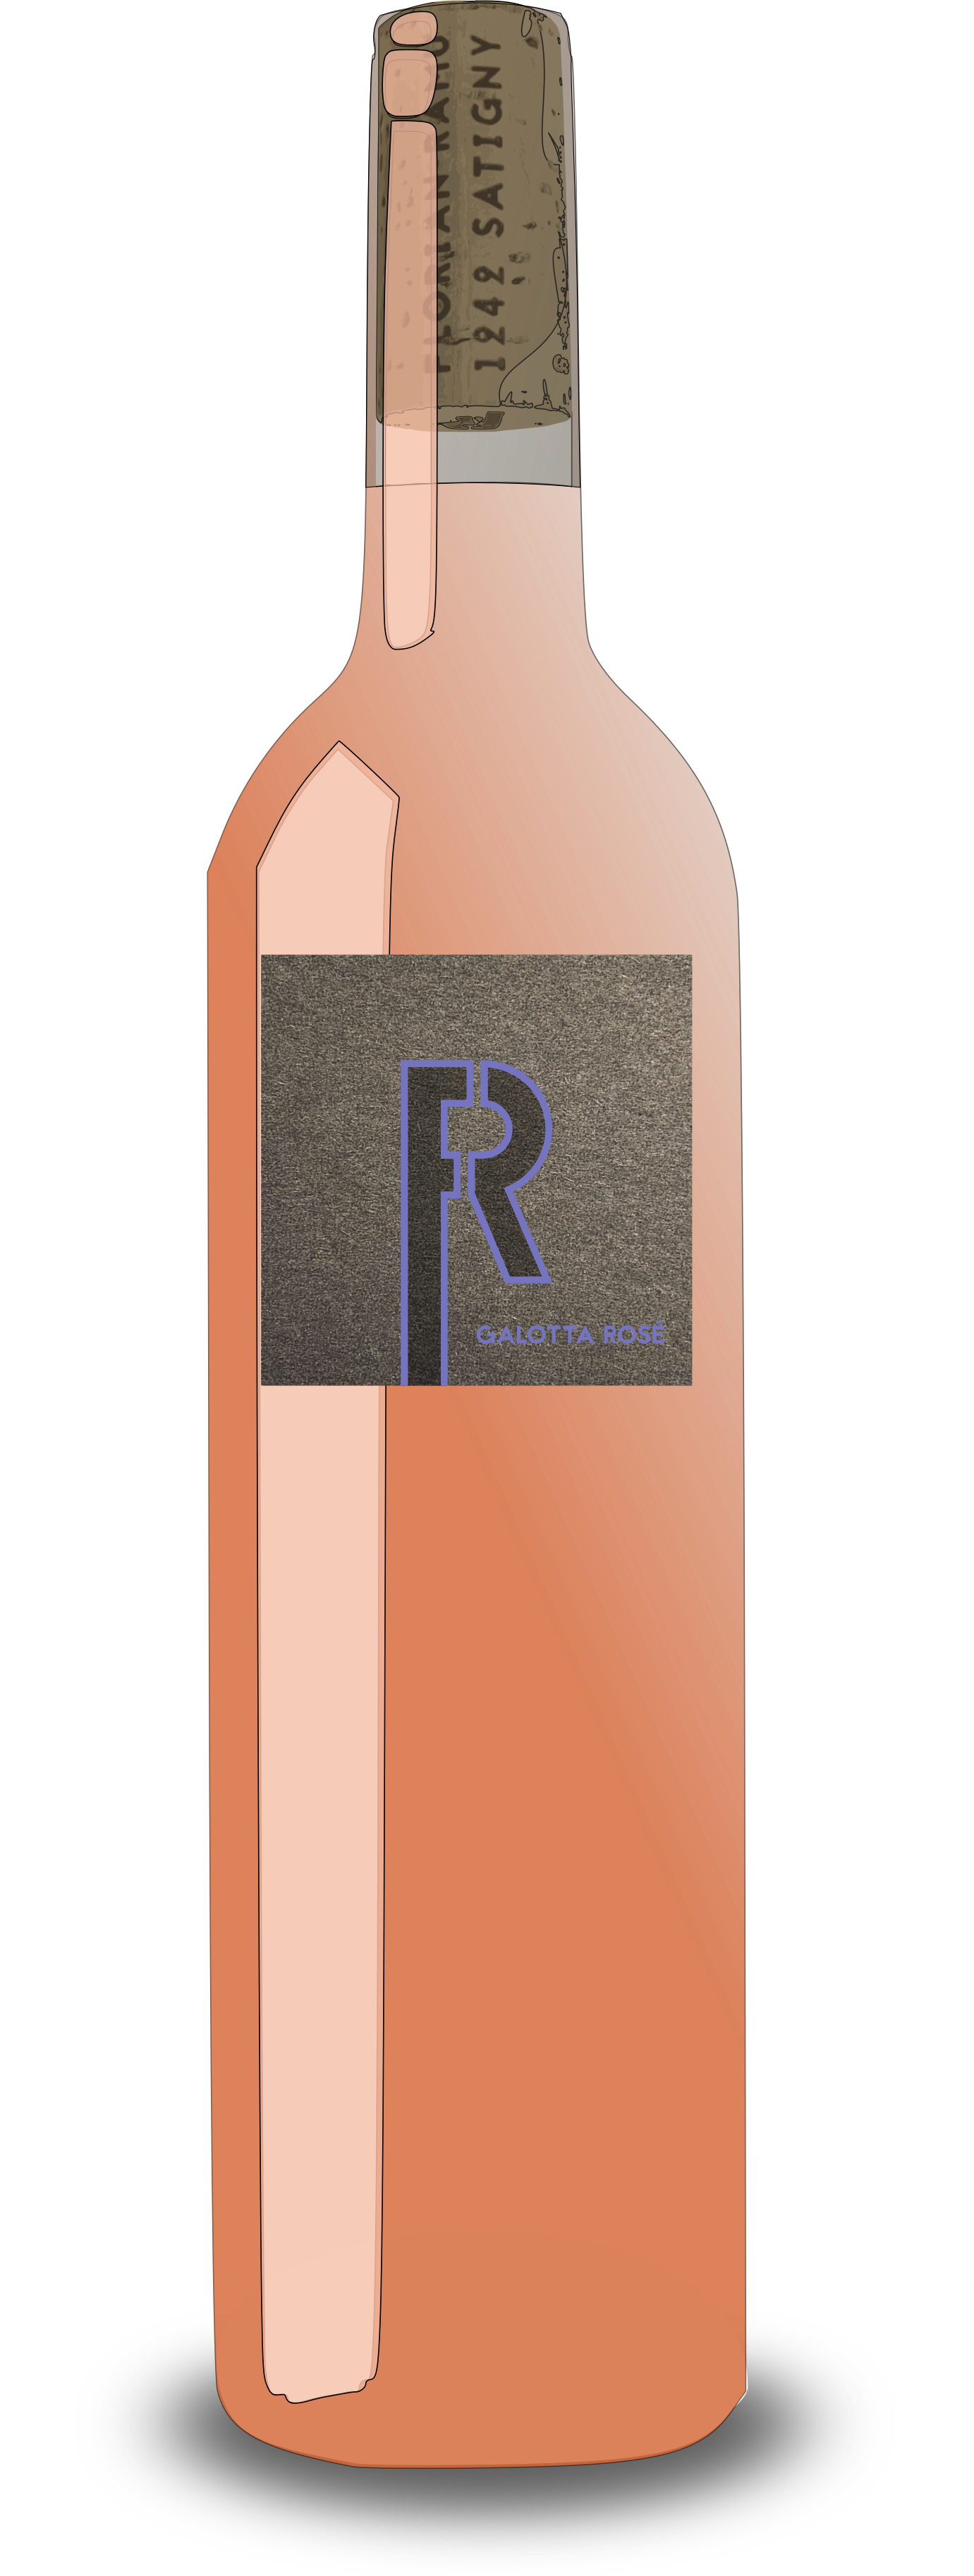 Mes vins, Galotta Rosé, Florian Ramu, Genève